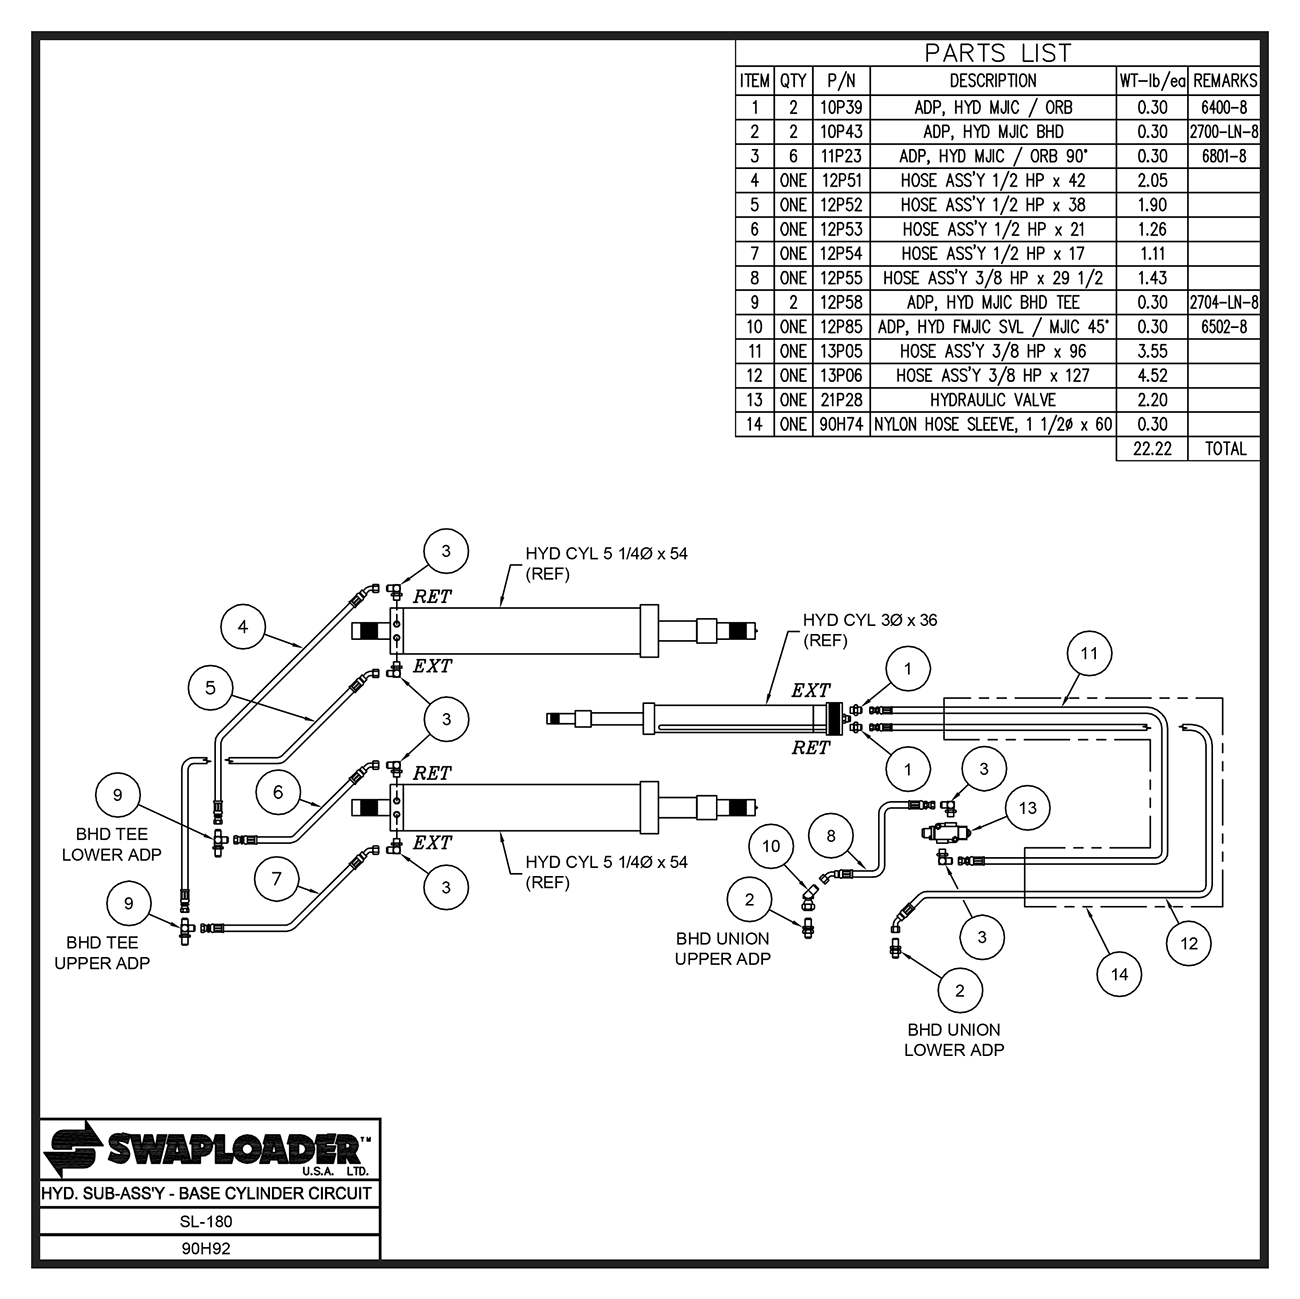 Swaploader SL-180 Hydraulic Sub-Assembly Base Cylinder Circuit Diagram